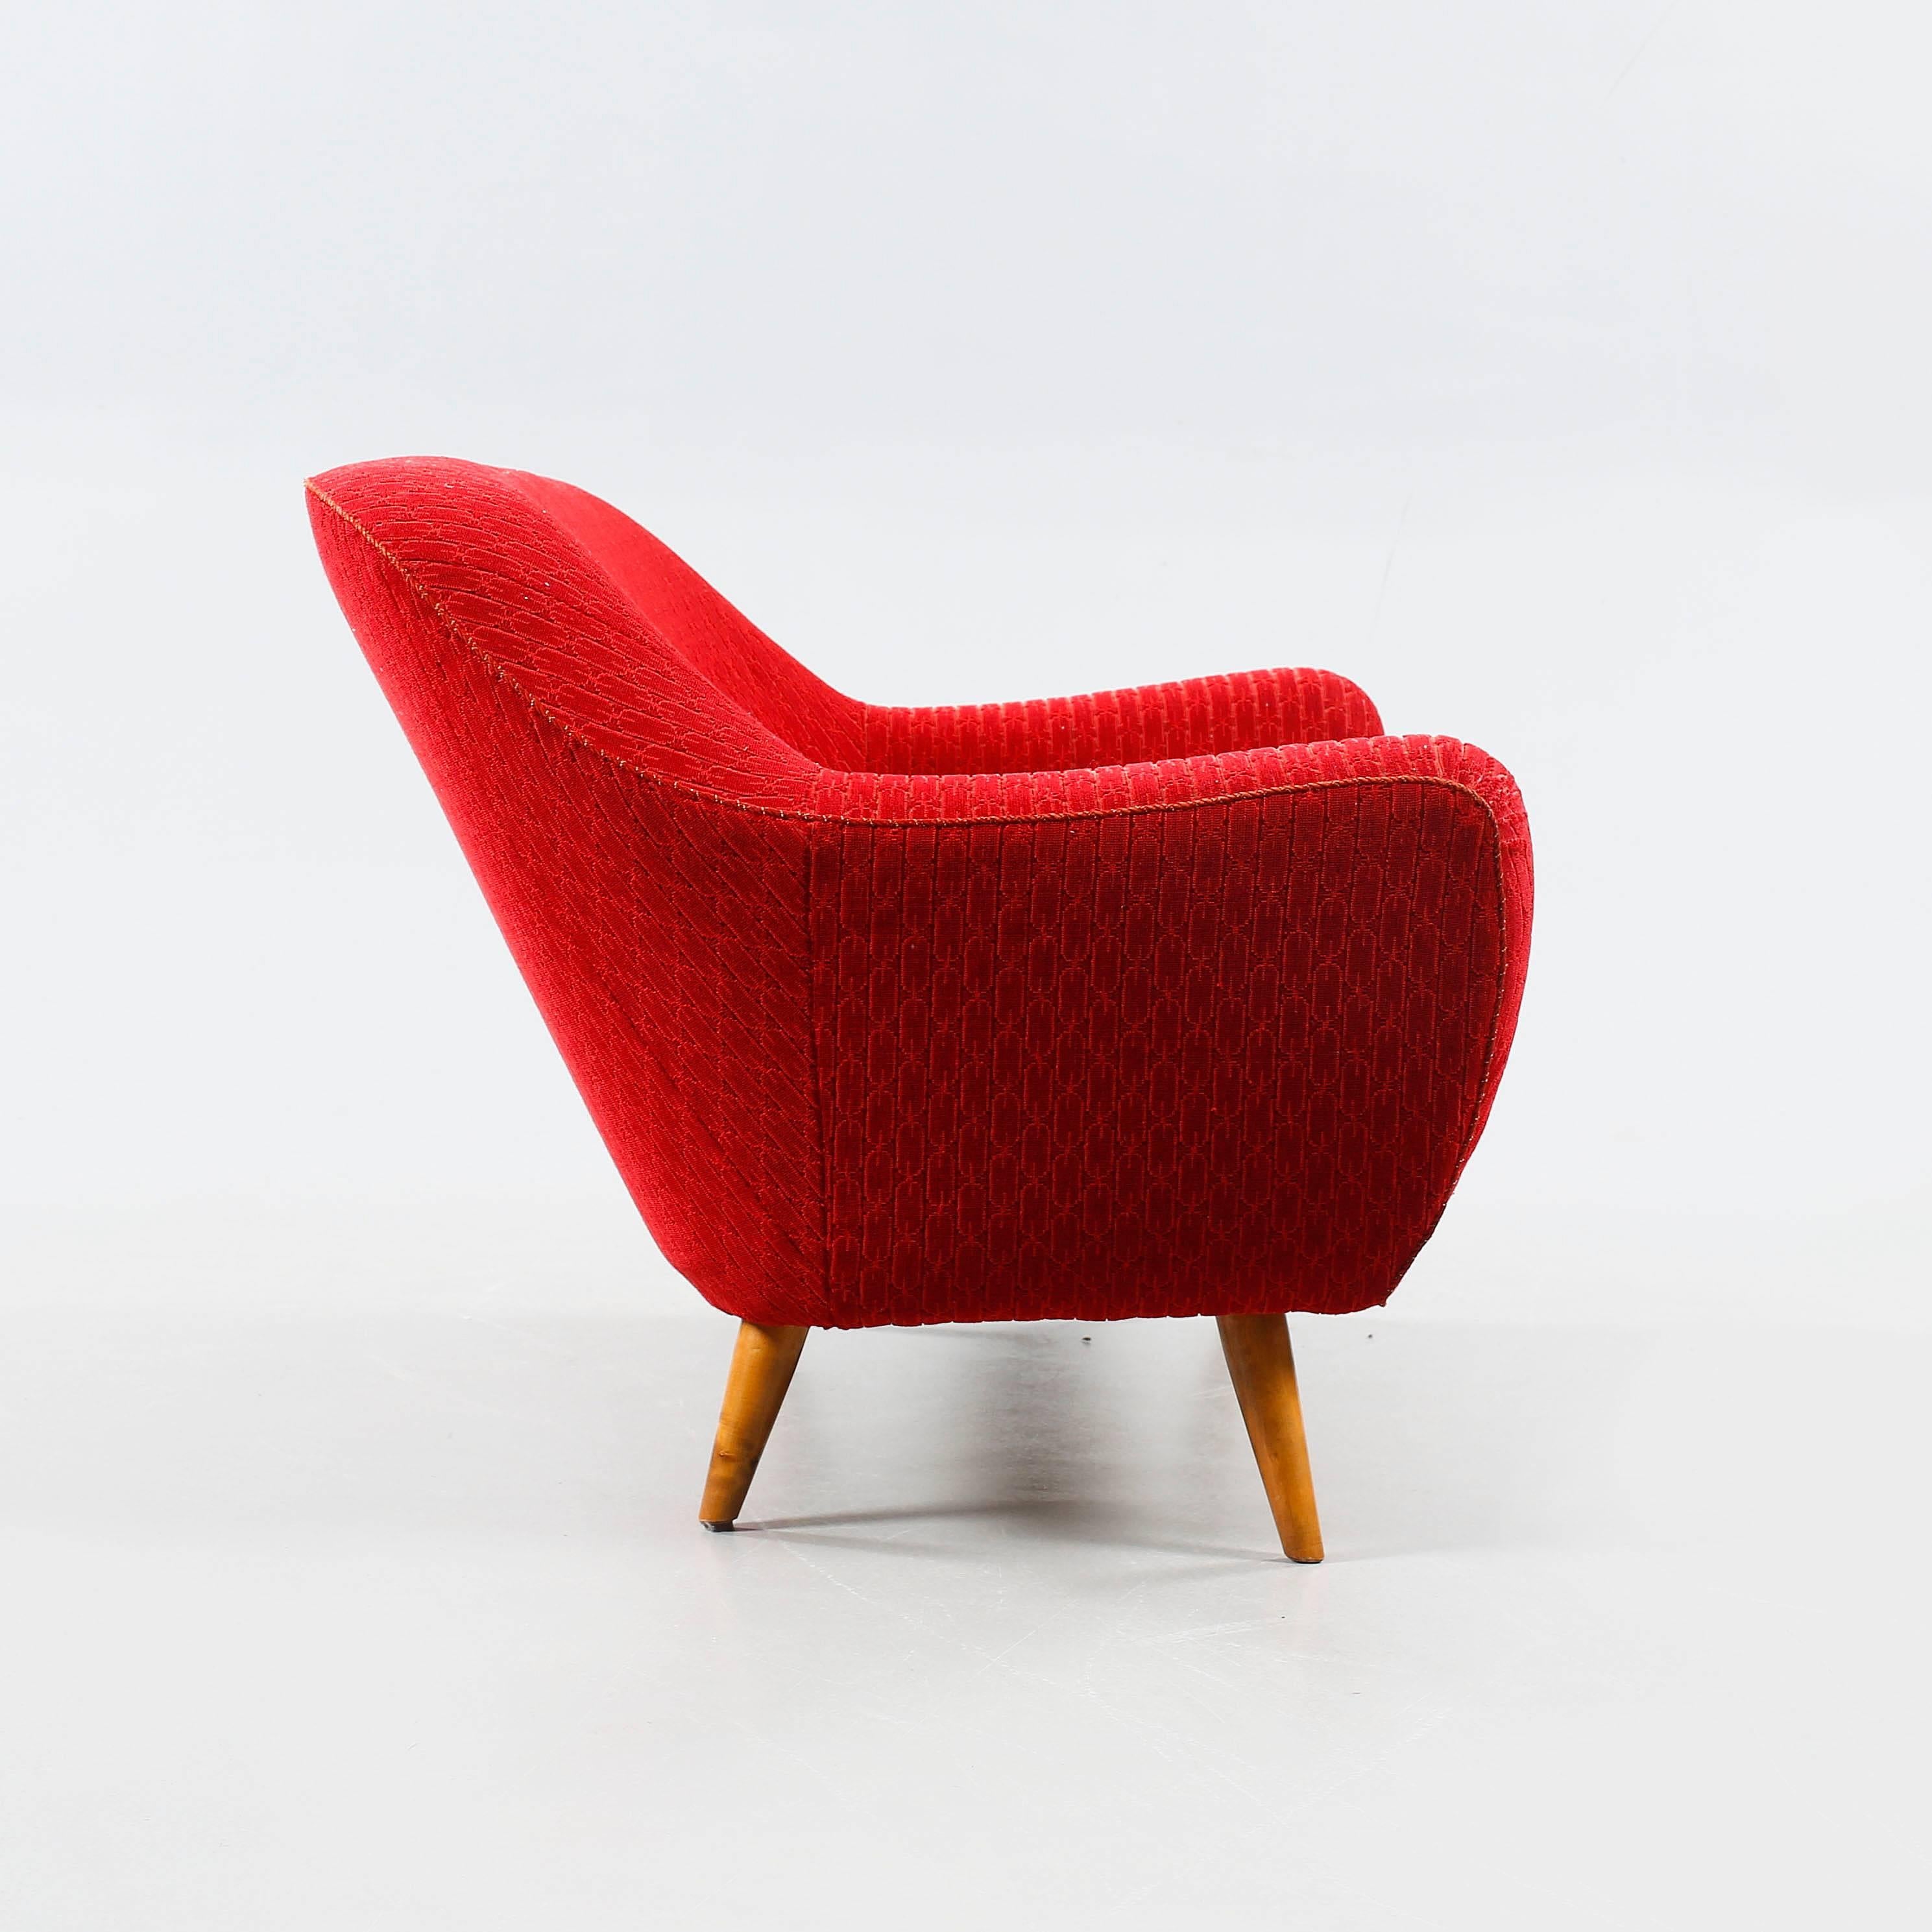 Sofa model 'Chile' designed by Svante Skogh for AB Klings Möbler, in Sweden 1953. Seat wool upholstery. Polished wooden legs.

 